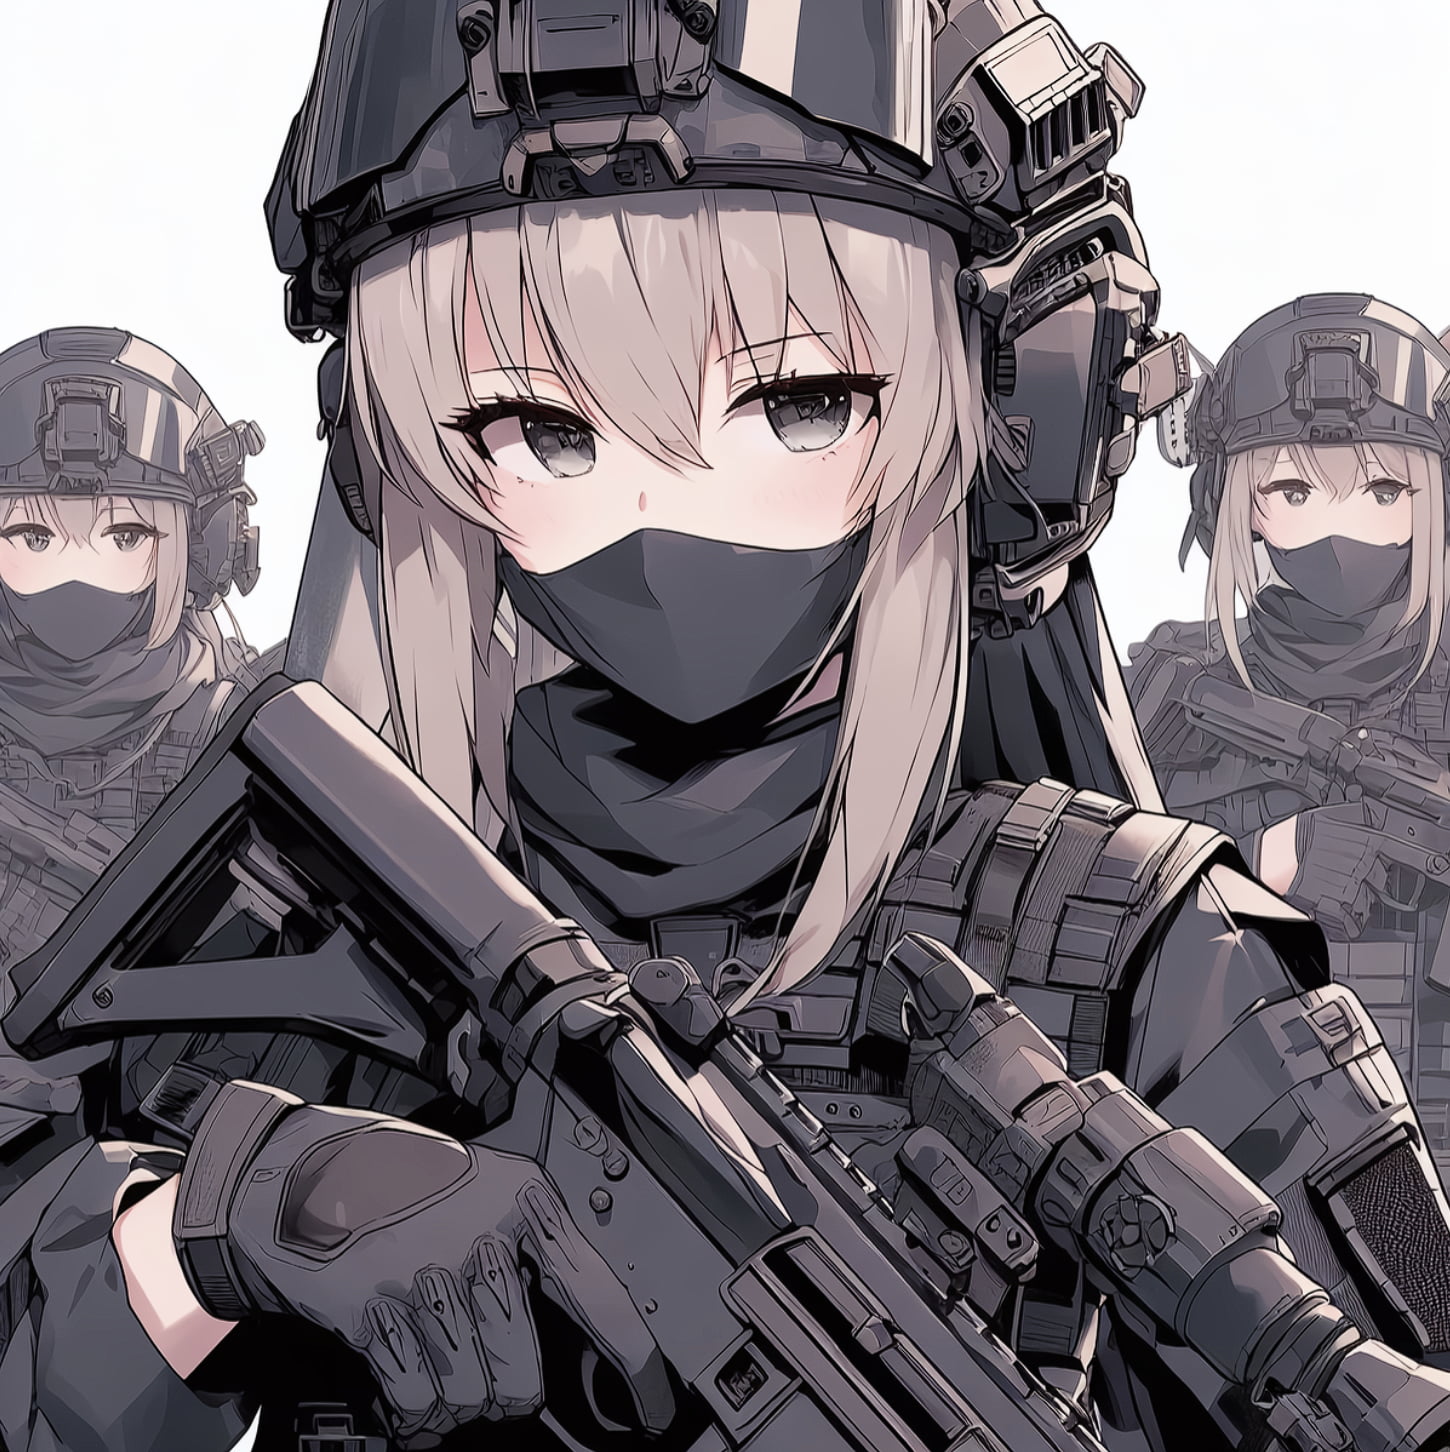 Pixiv, anime girls, girls with guns, military, mask, bulletproof vest